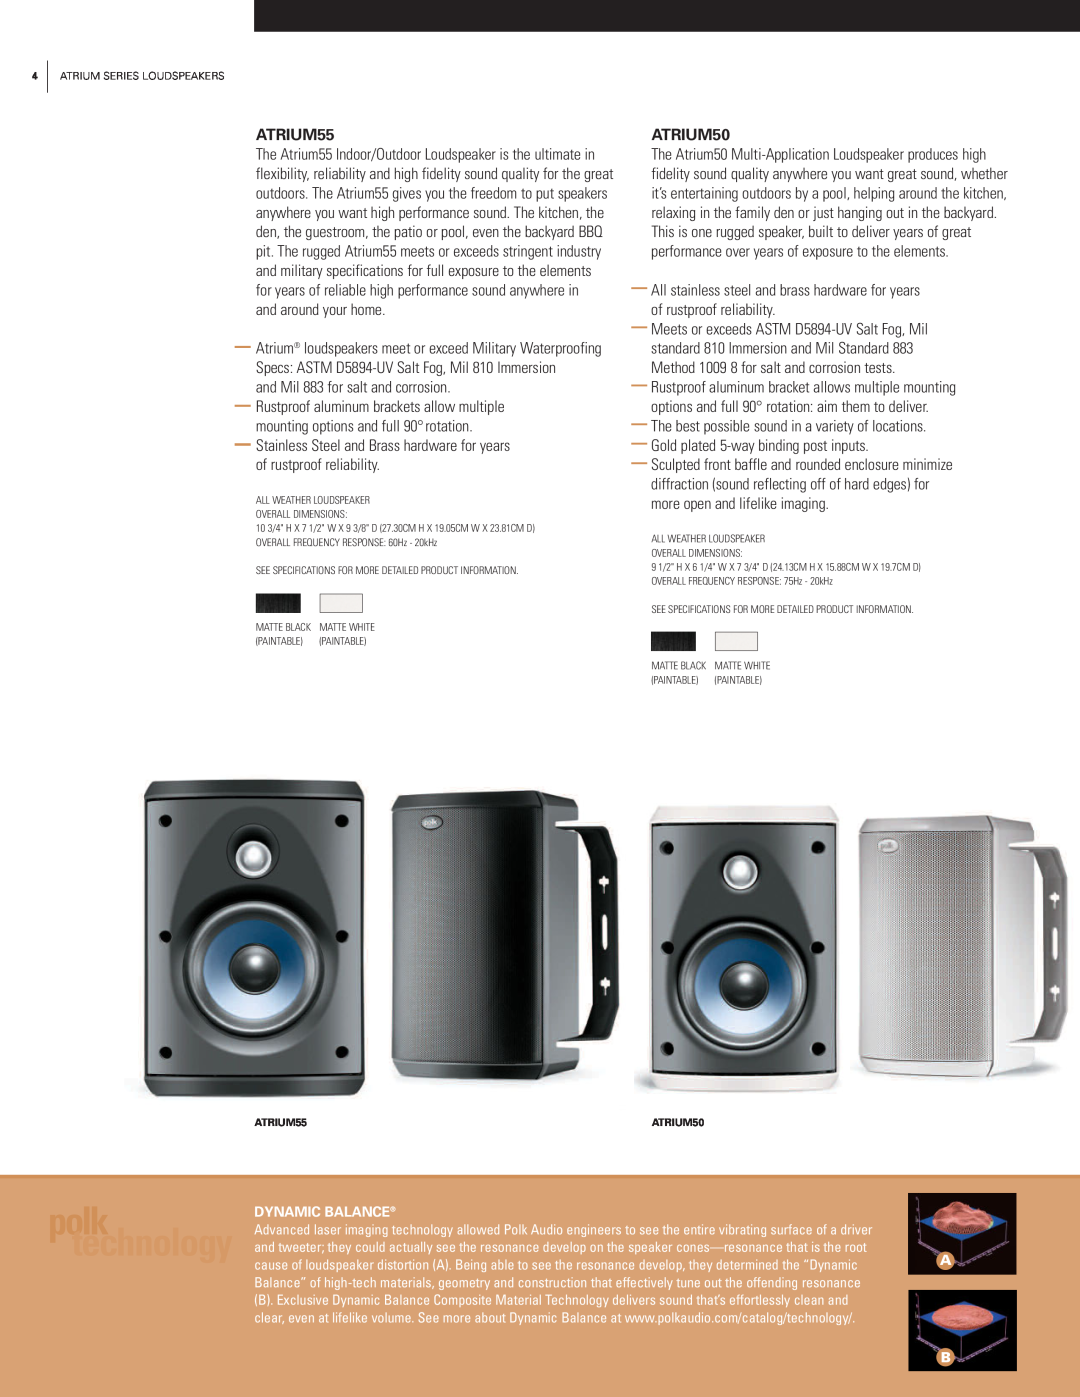 Polk Audio 65SDI manual ATRIUM55, ATRIUM50, polk technology, and around your home, Dynamic Balance 